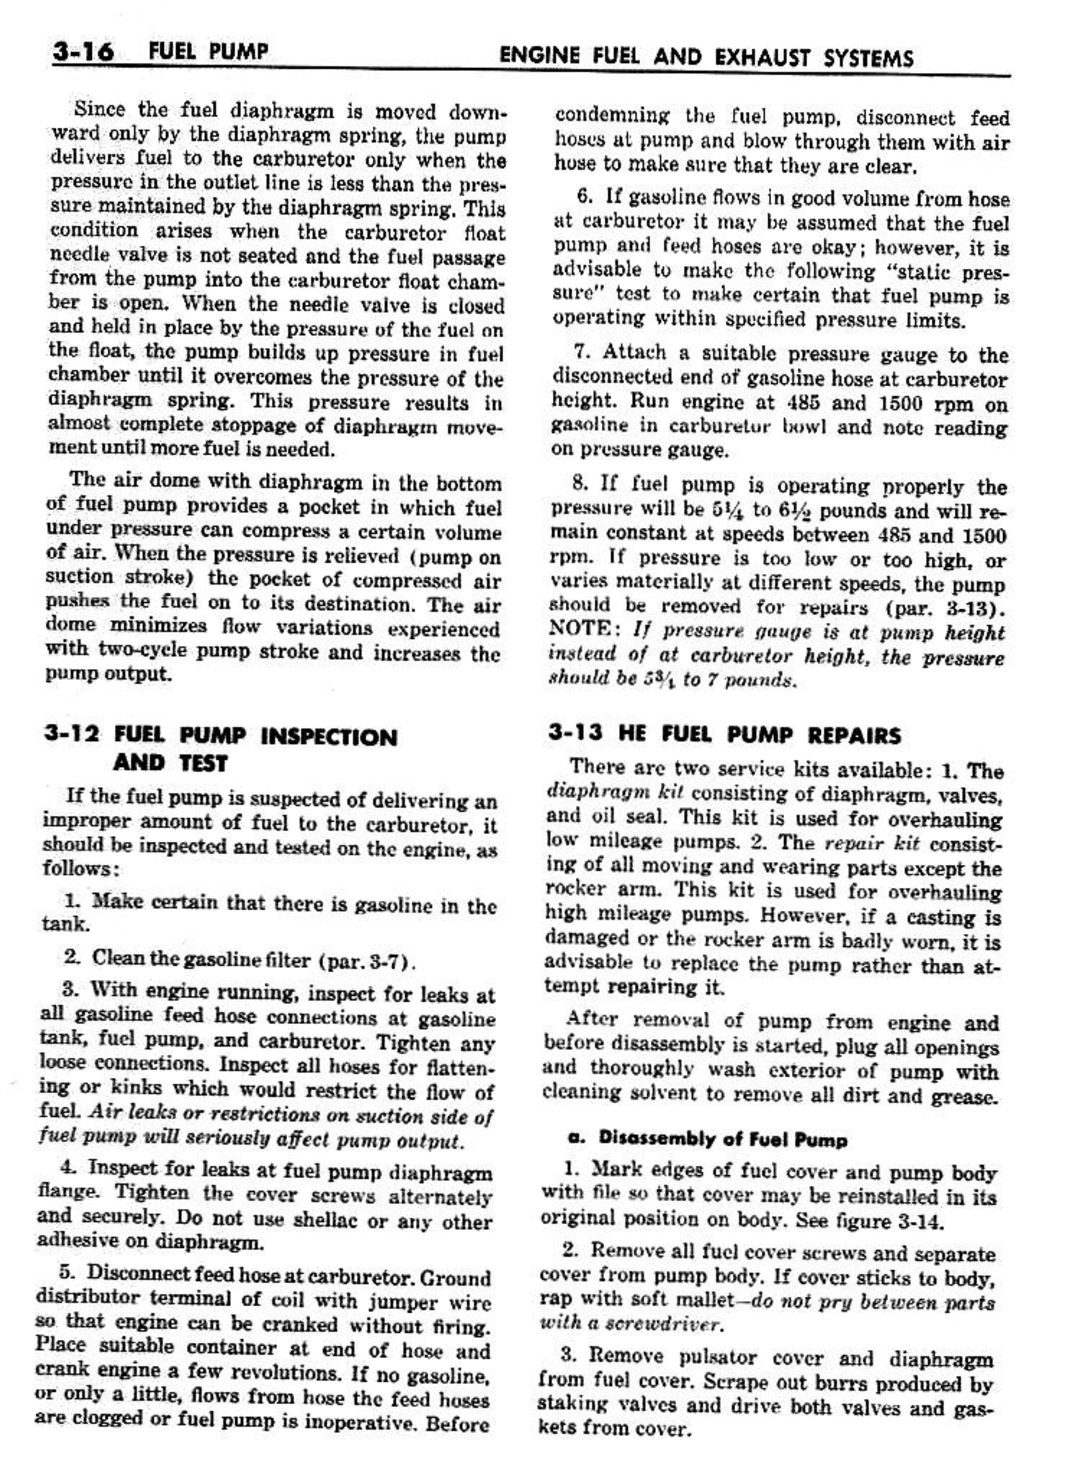 n_04 1959 Buick Shop Manual - Engine Fuel & Exhaust-016-016.jpg